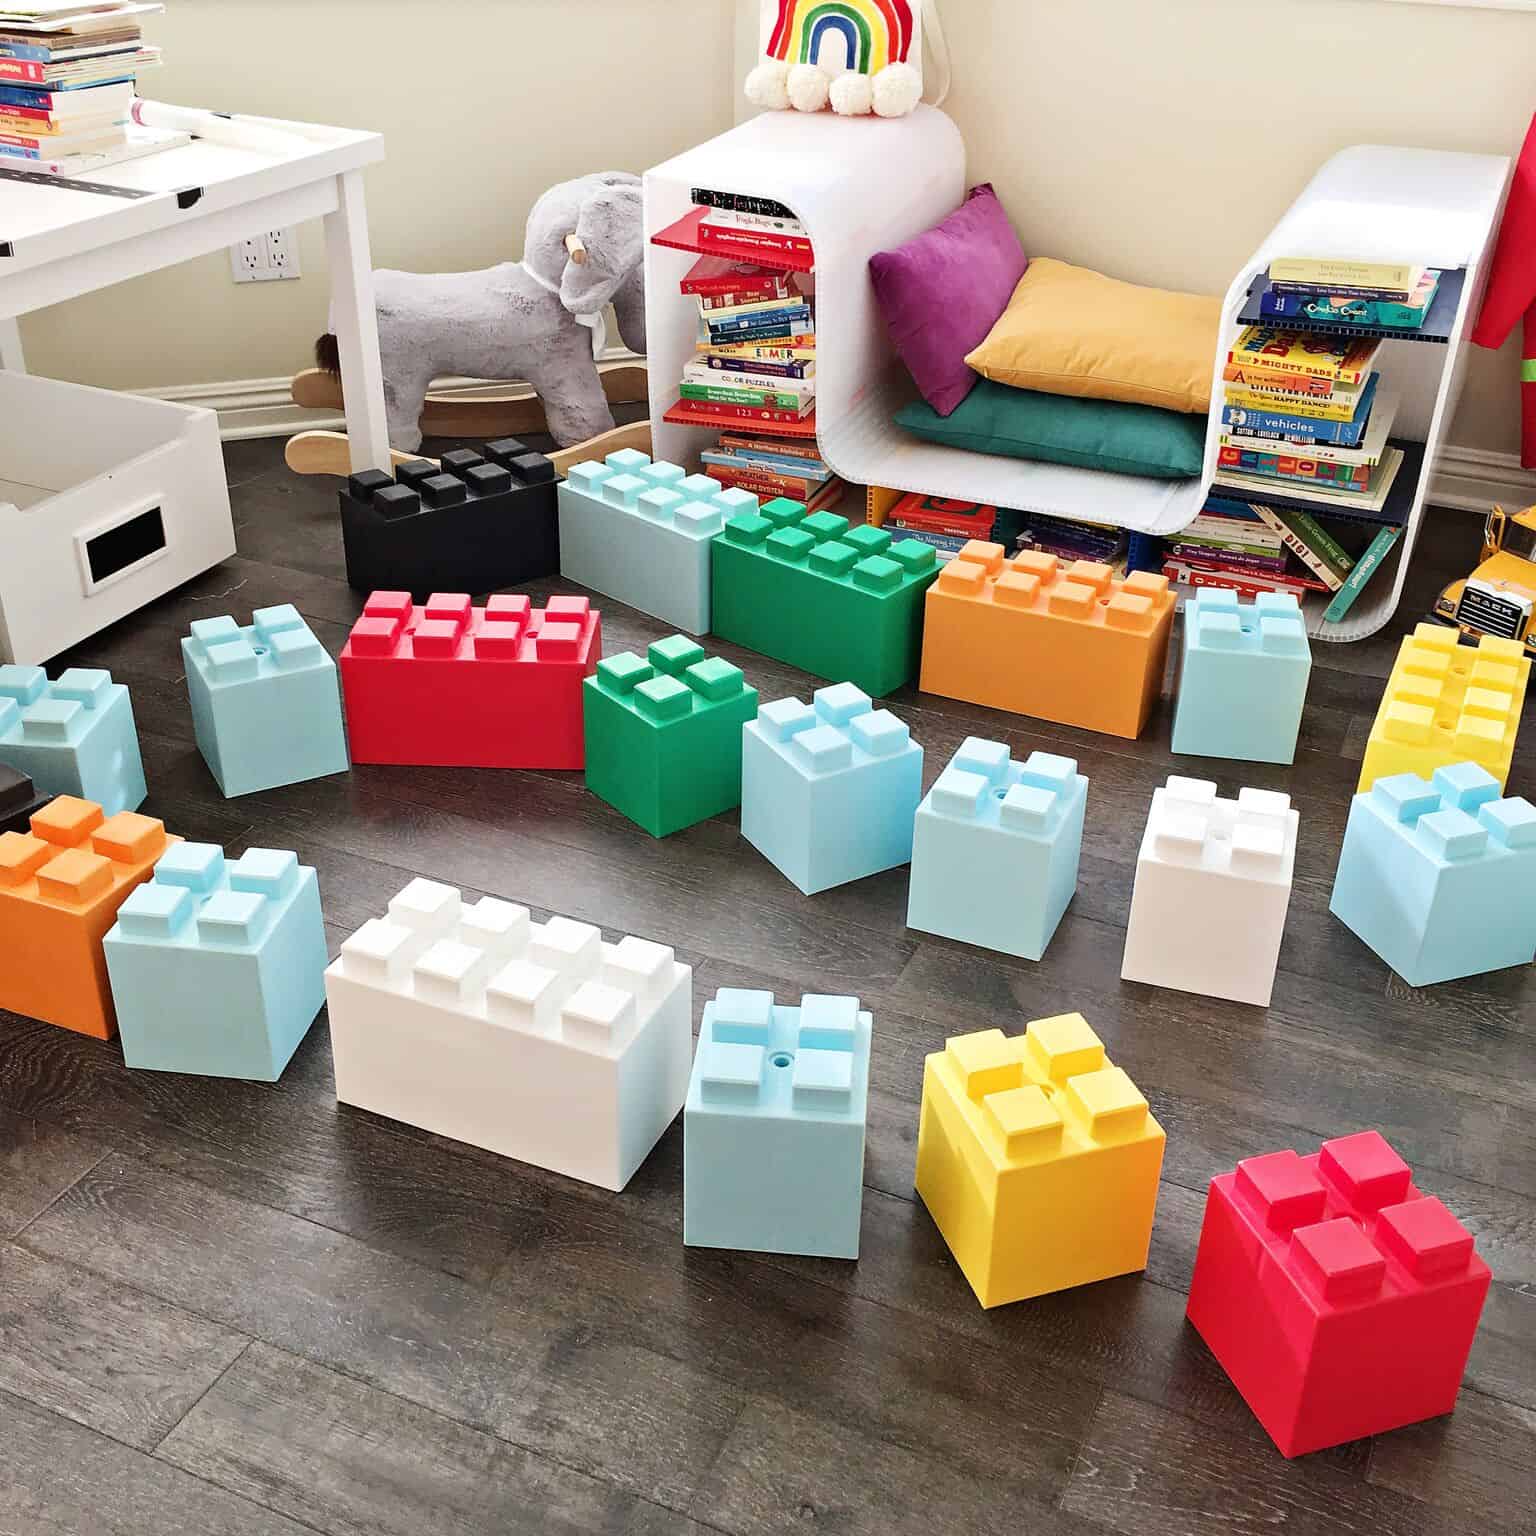 GIANT LEGO LIKE BUILDING BLOCK TOYS FOR KIDS - hello, Wonderful